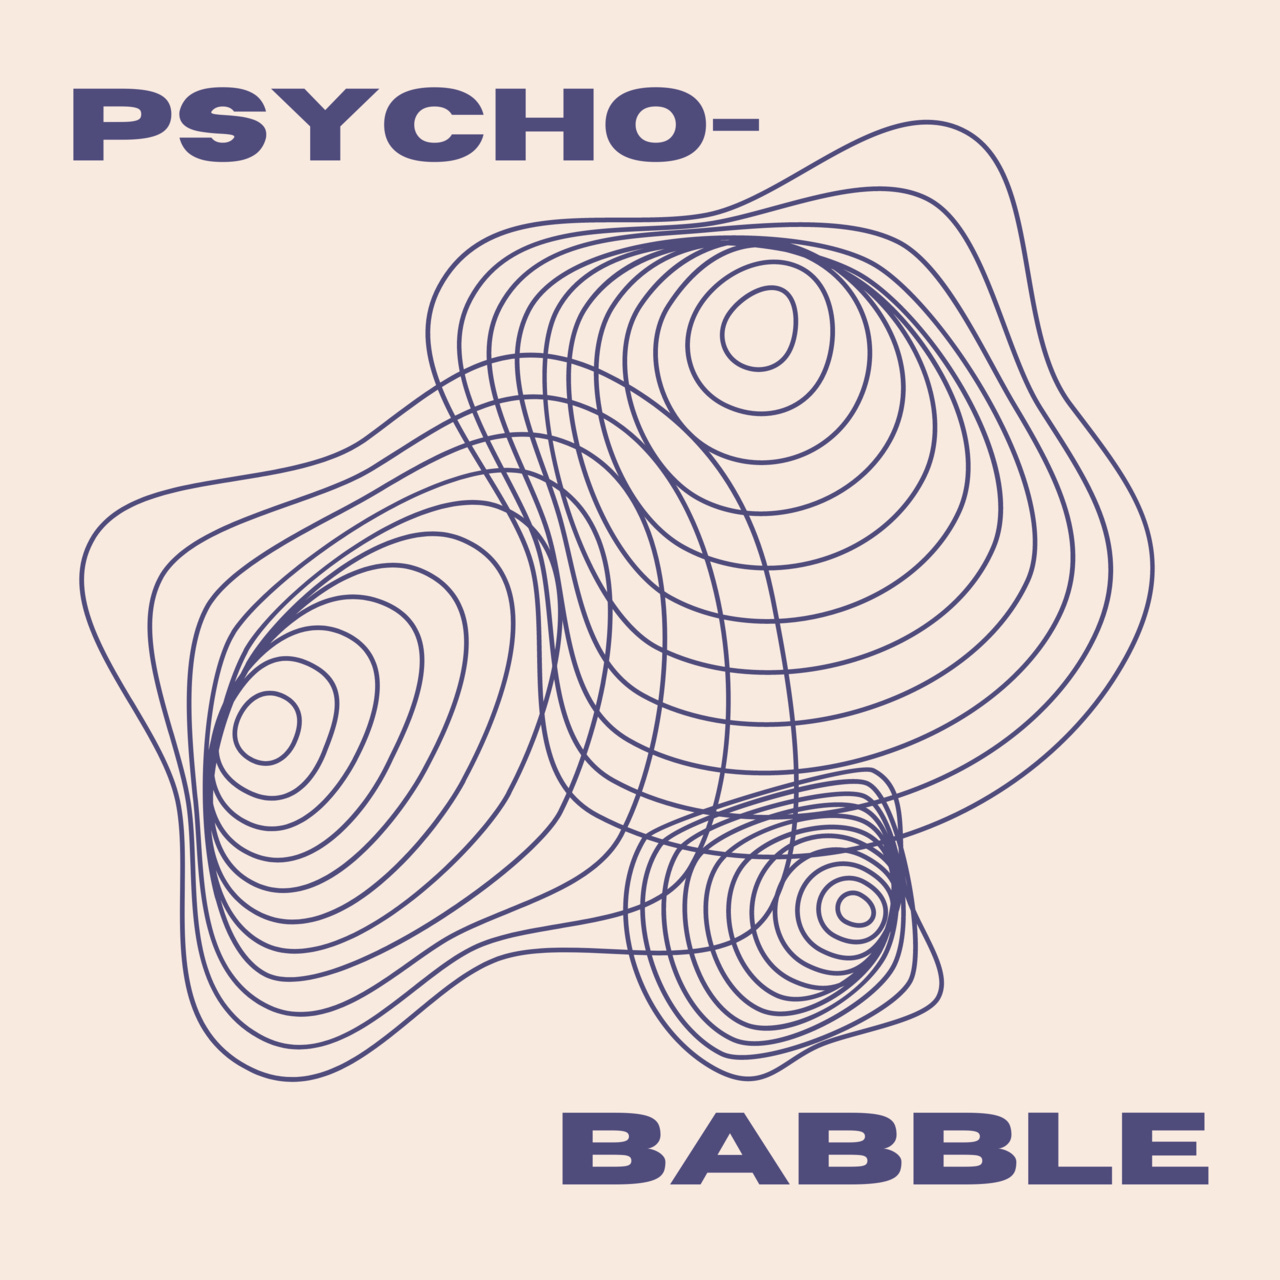 Psycho-Babble